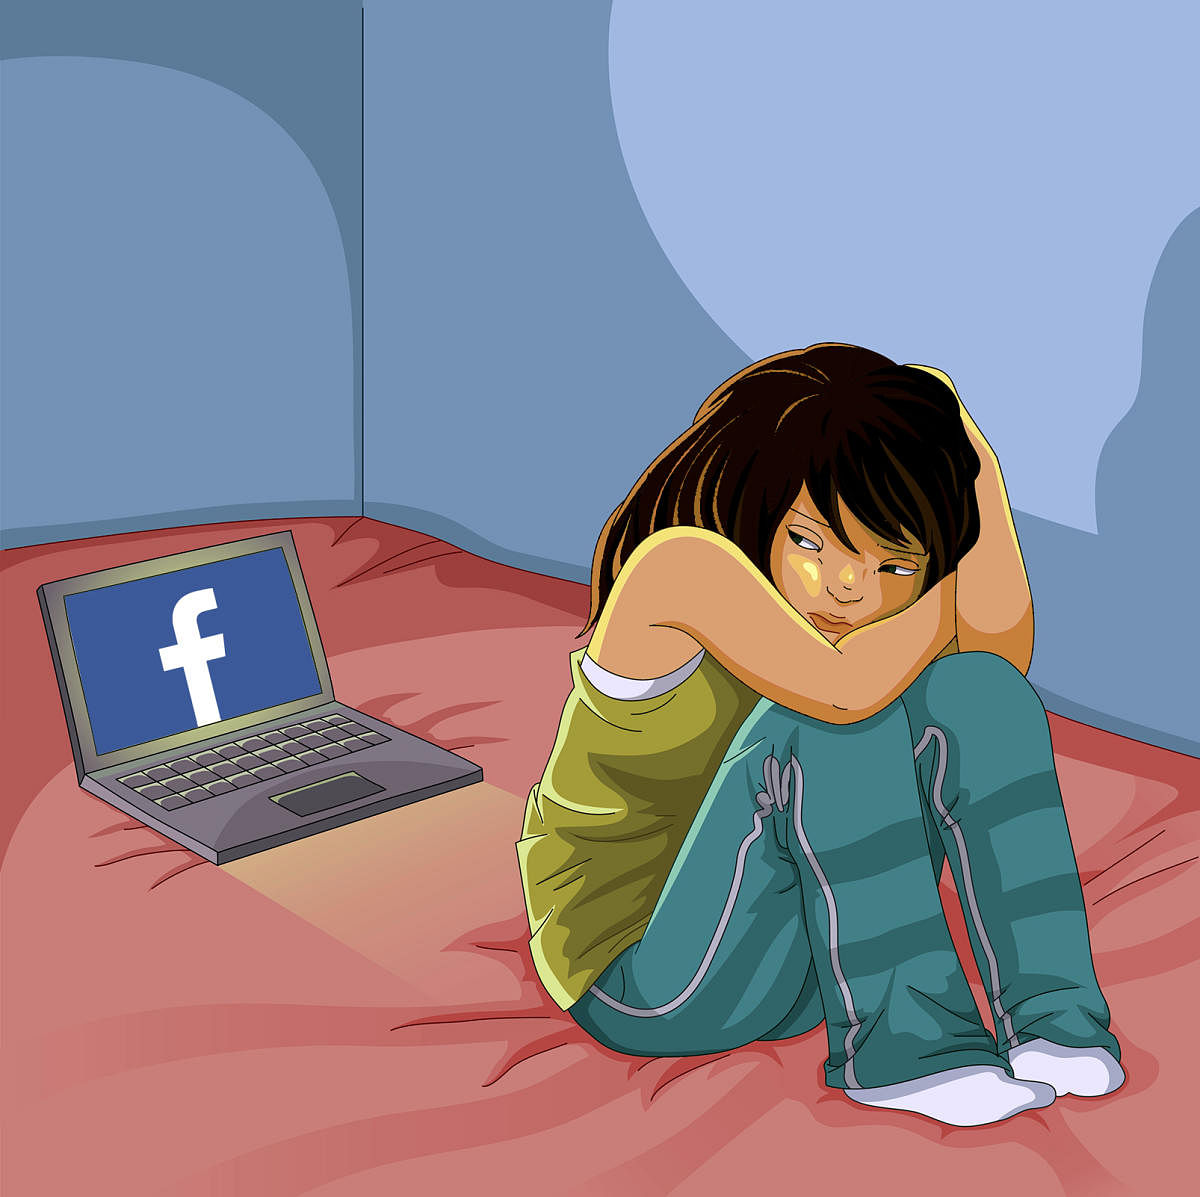 Social media addiction can lead to depression.